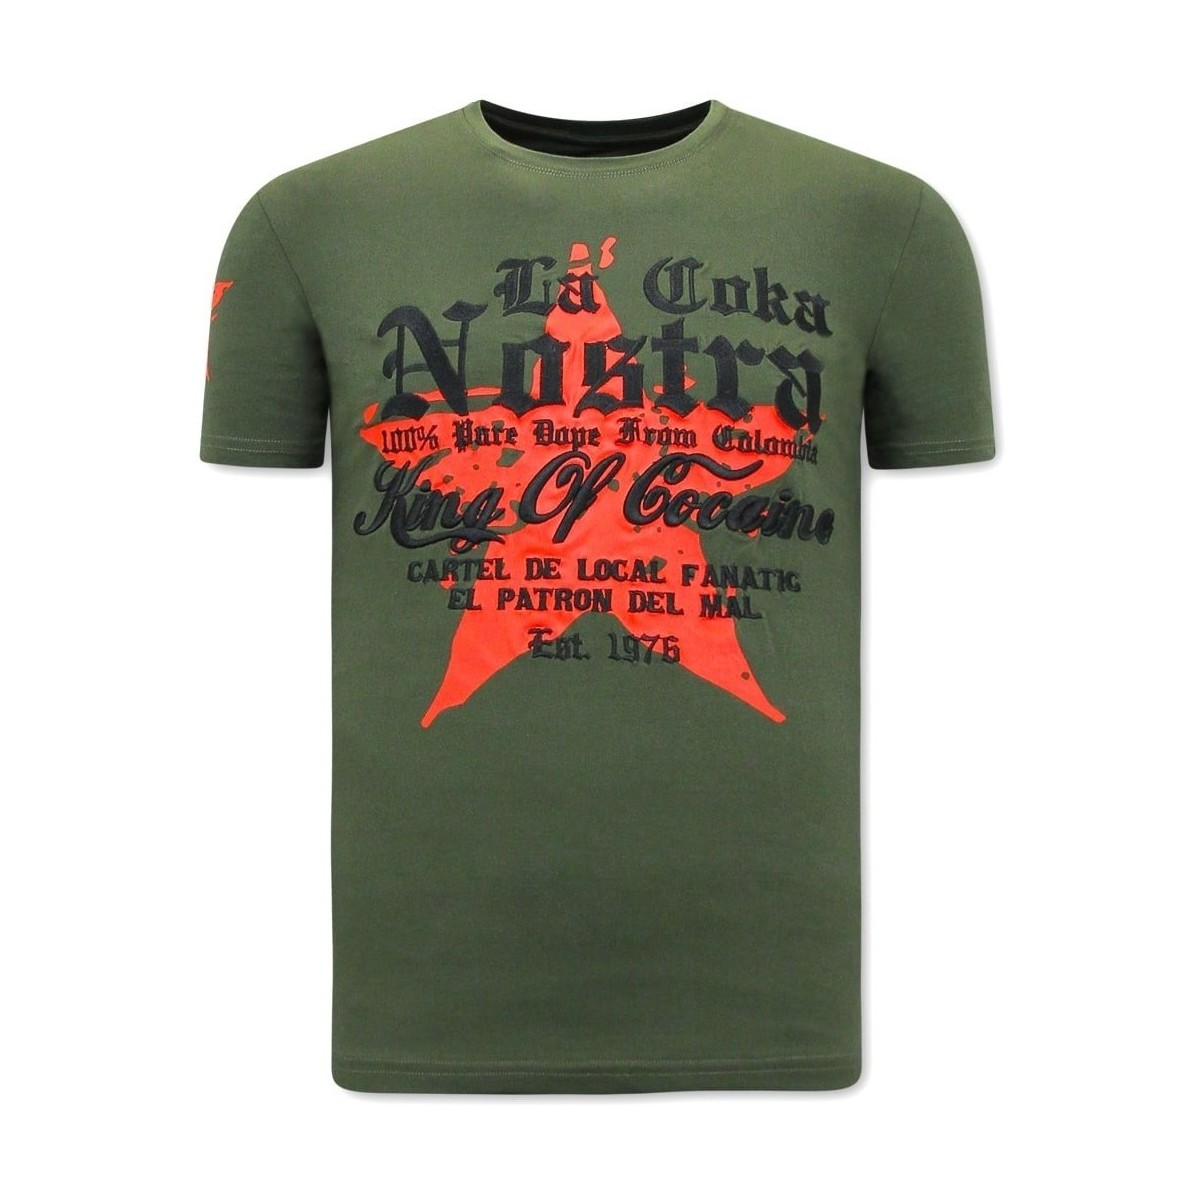 Textil Homem T-Shirt mangas curtas Local Fanatic 119088322 Verde